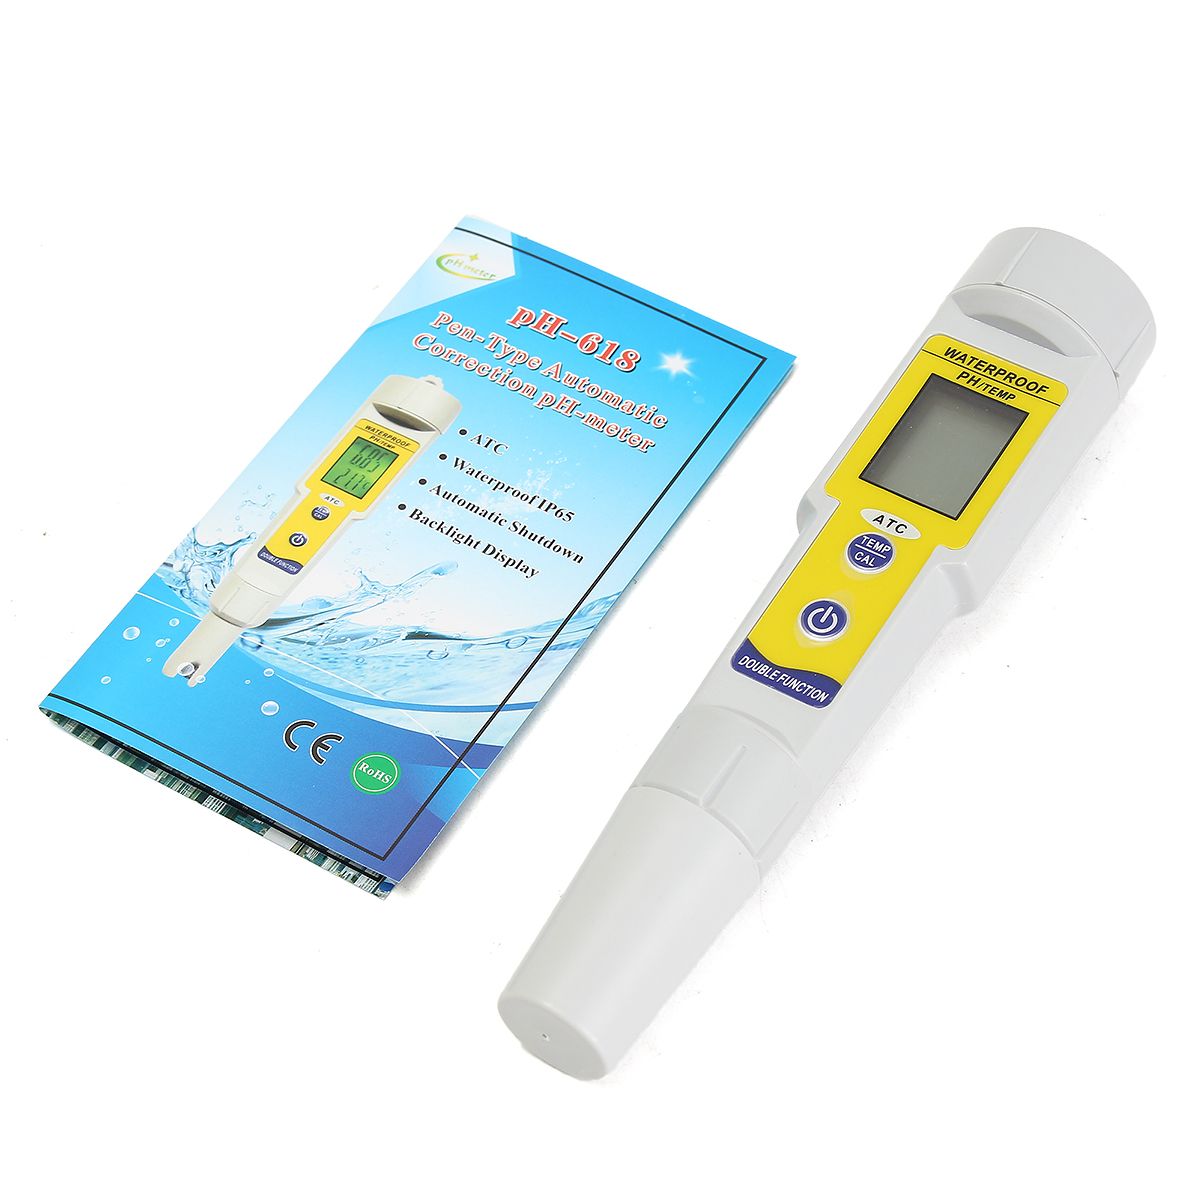 Auto-Calibration-Digital-PH-Tester-Meter-Thermometer-Kit-Waterproof-Pocket-Pen-1128969